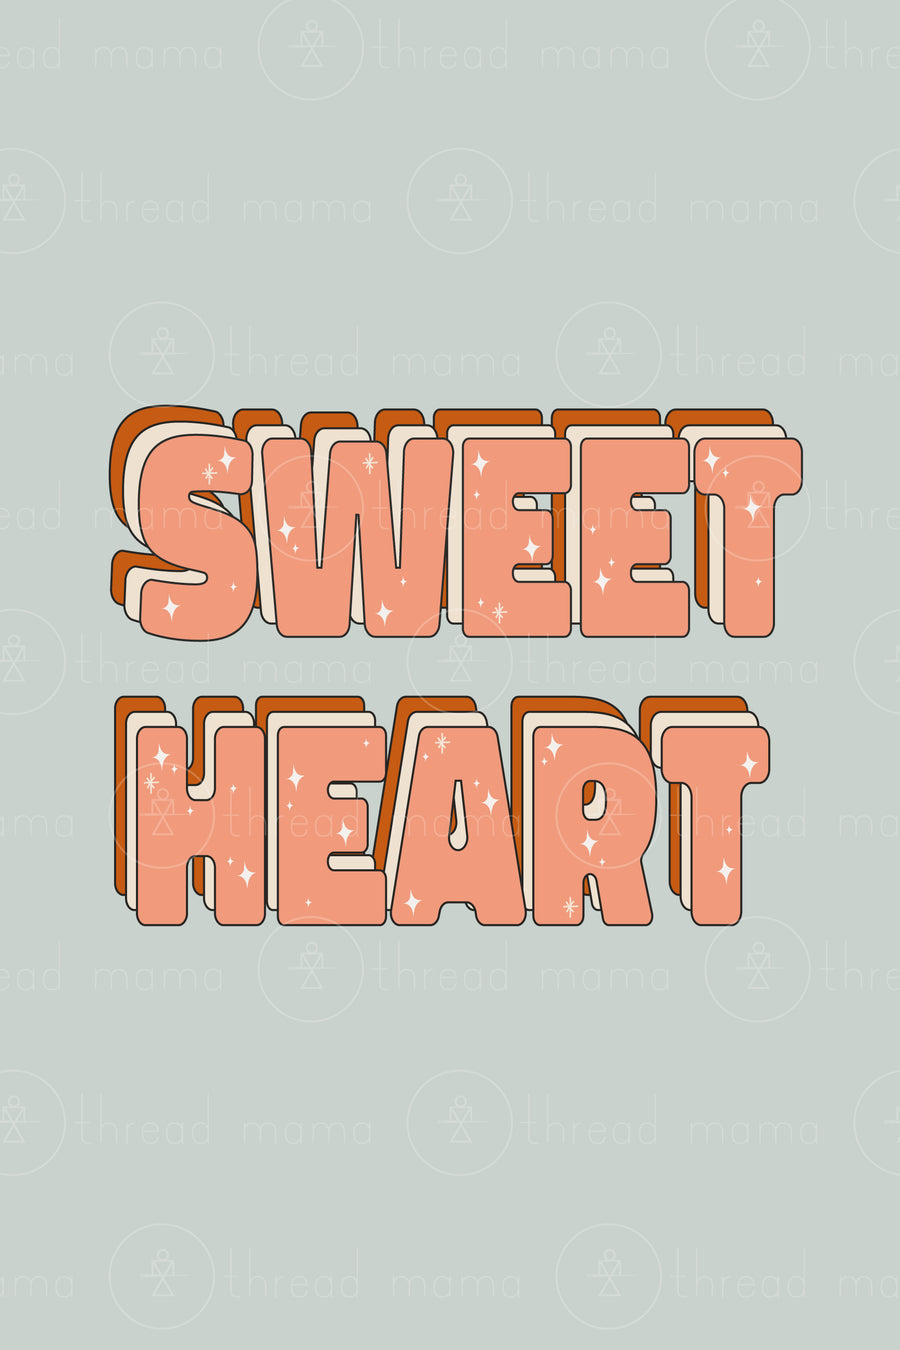 Sweet Heart (Printable Poster)